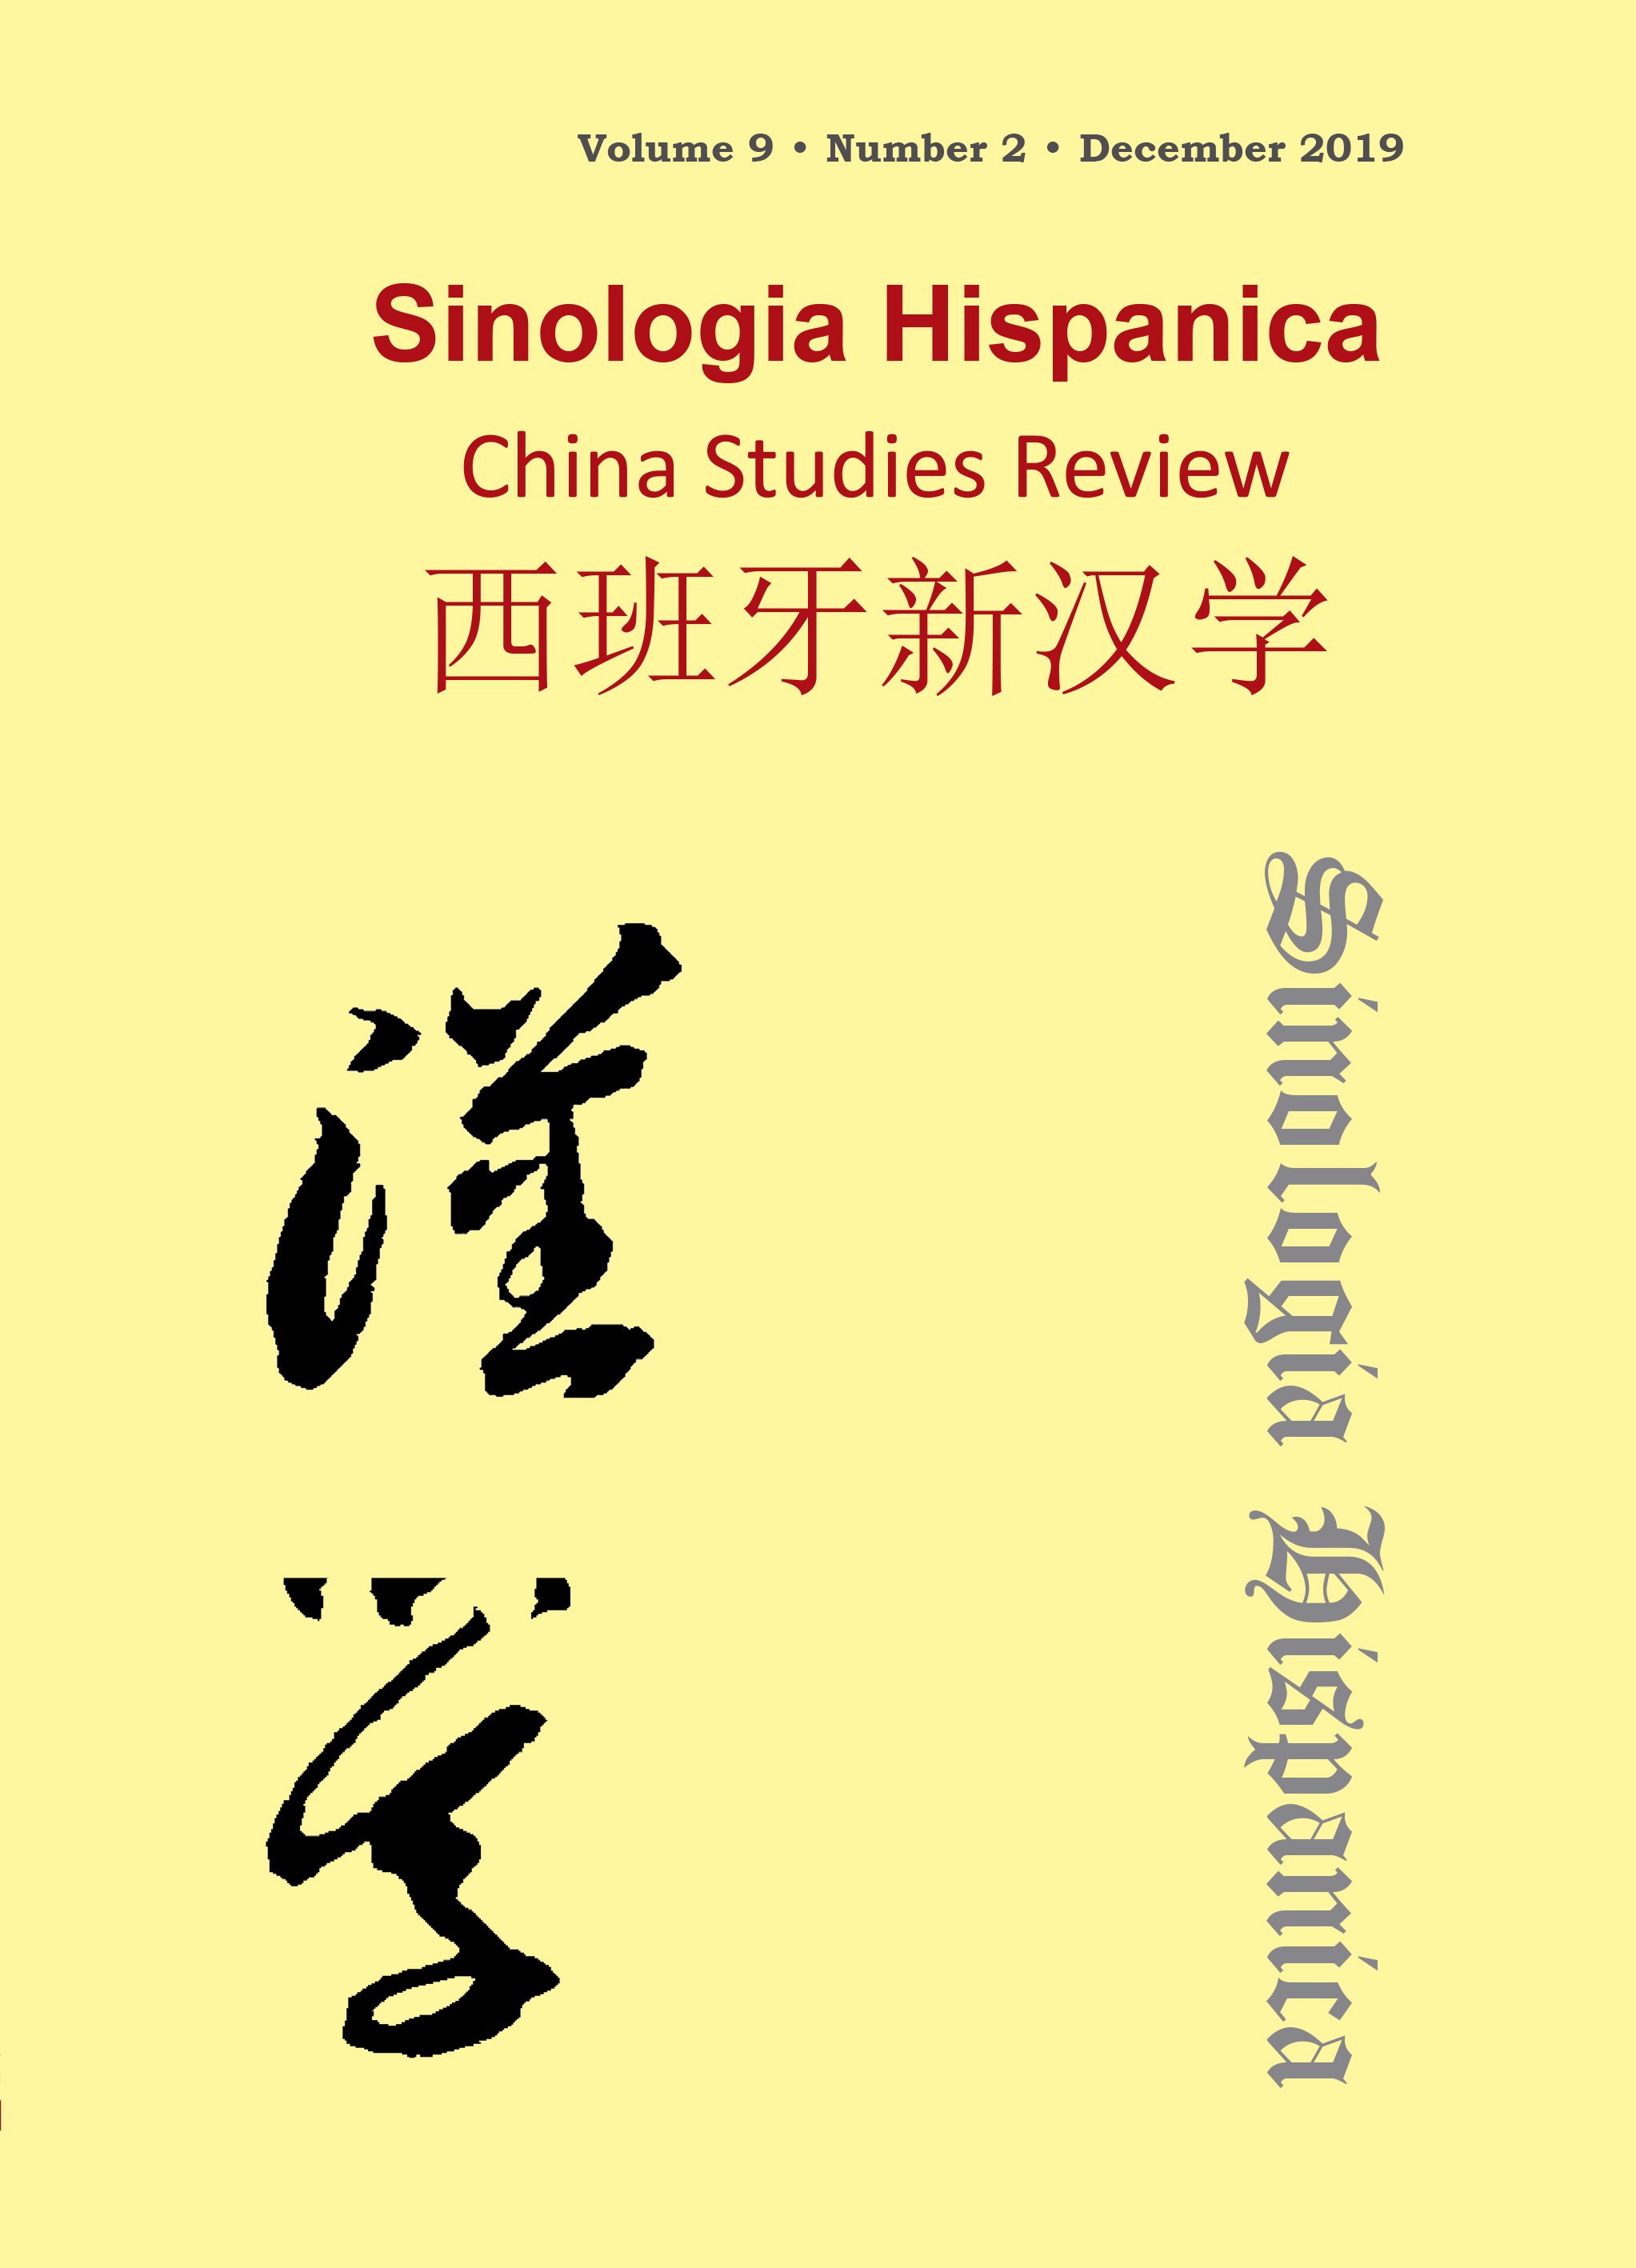 					View Vol. 9 No. 2 (2019): Sinologia Hispanica China Studies Review
				